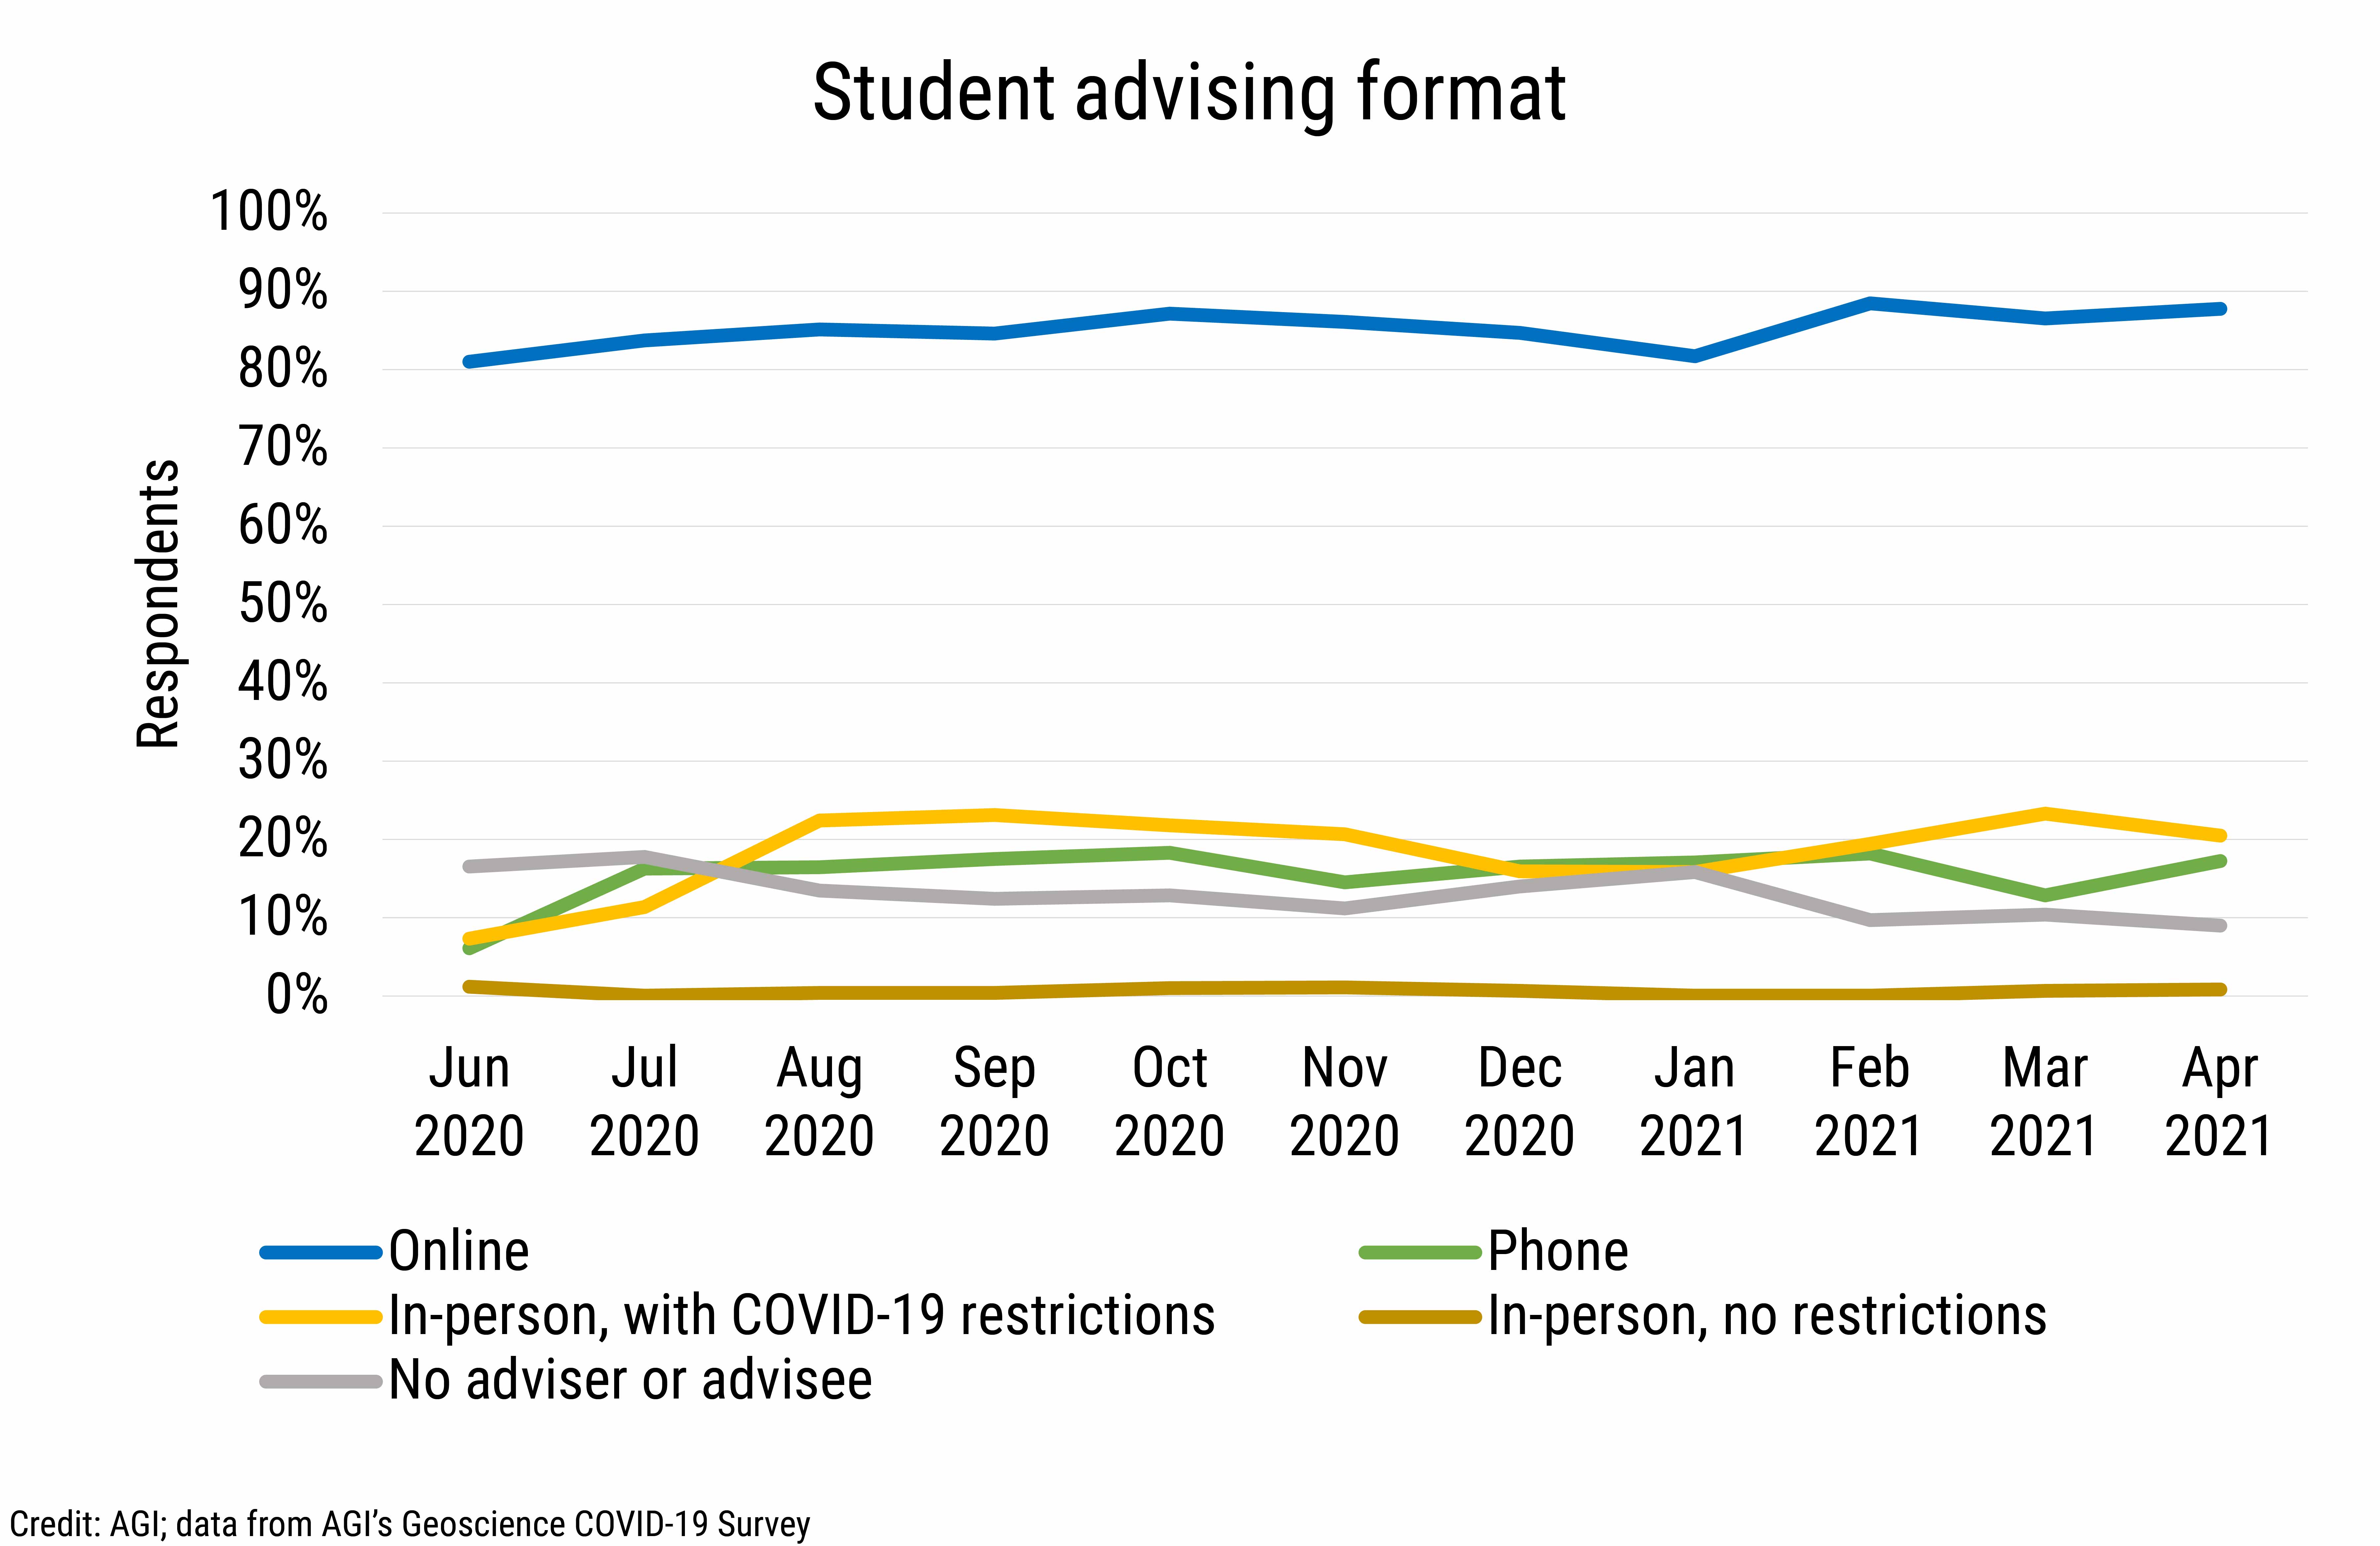 DB_2021-015 chart 03: Student advising format (Credit: AGI; data from AGI's Geoscience COVID-19 Survey)